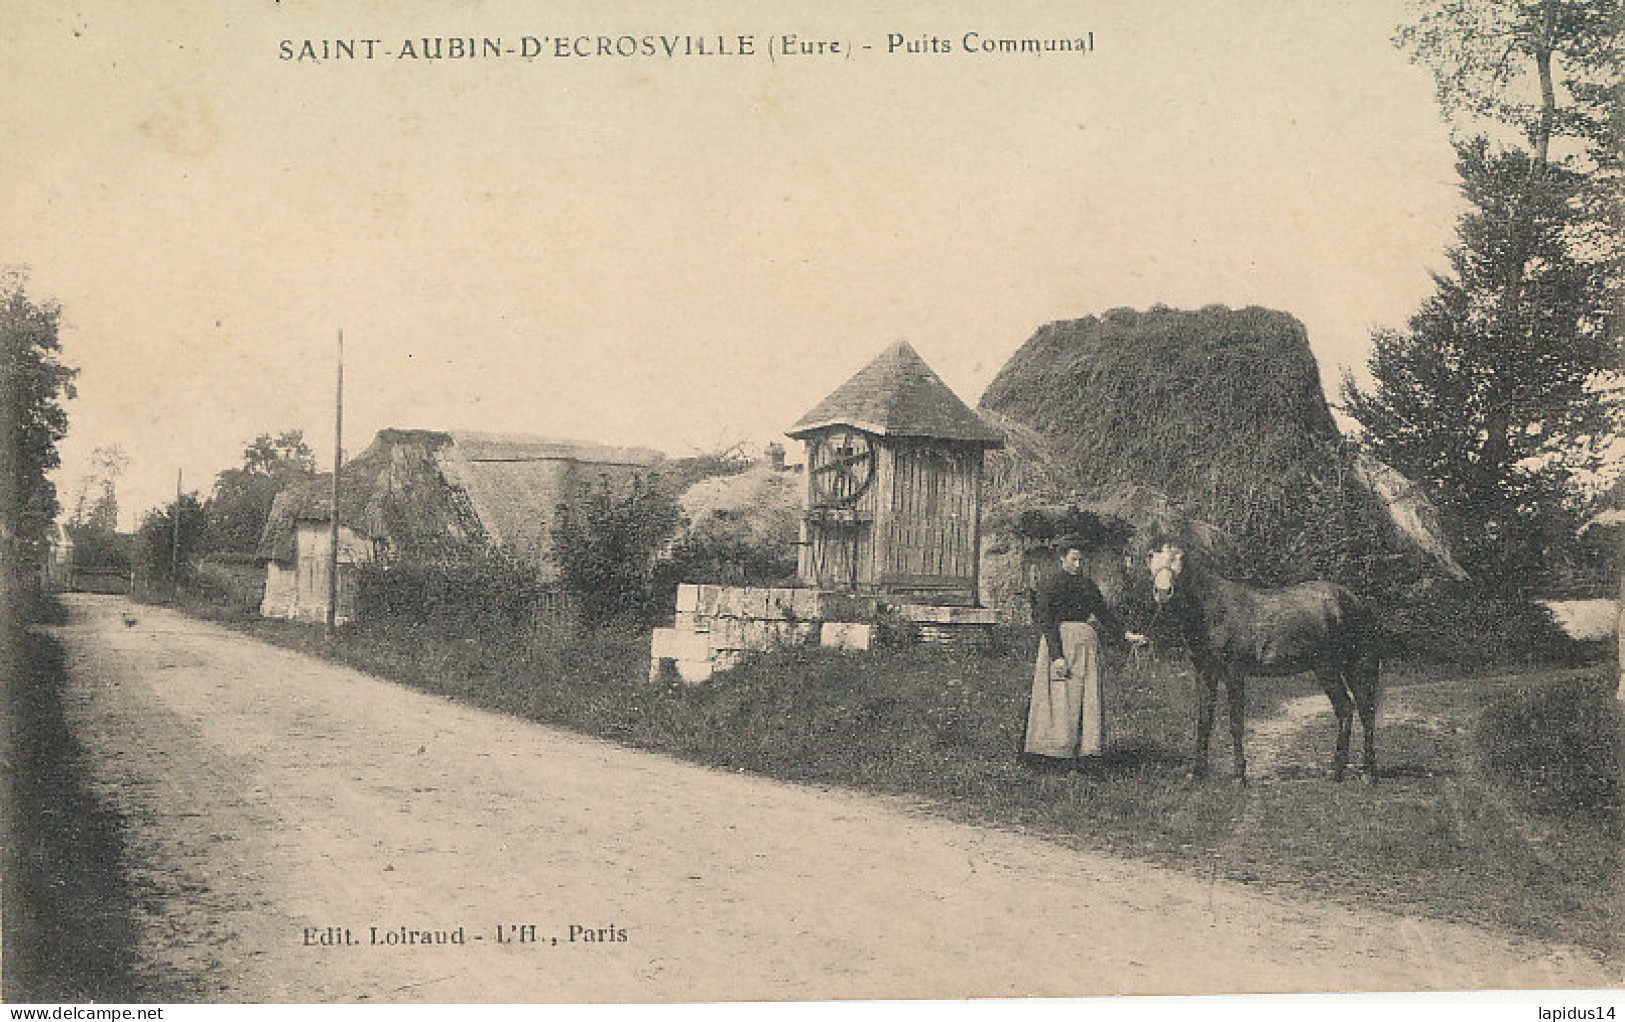 AX 579  C P A  SAINT AUBIN D'ECROSVILLE (27)   PUITS COMMUNAL - Saint-Aubin-d'Ecrosville